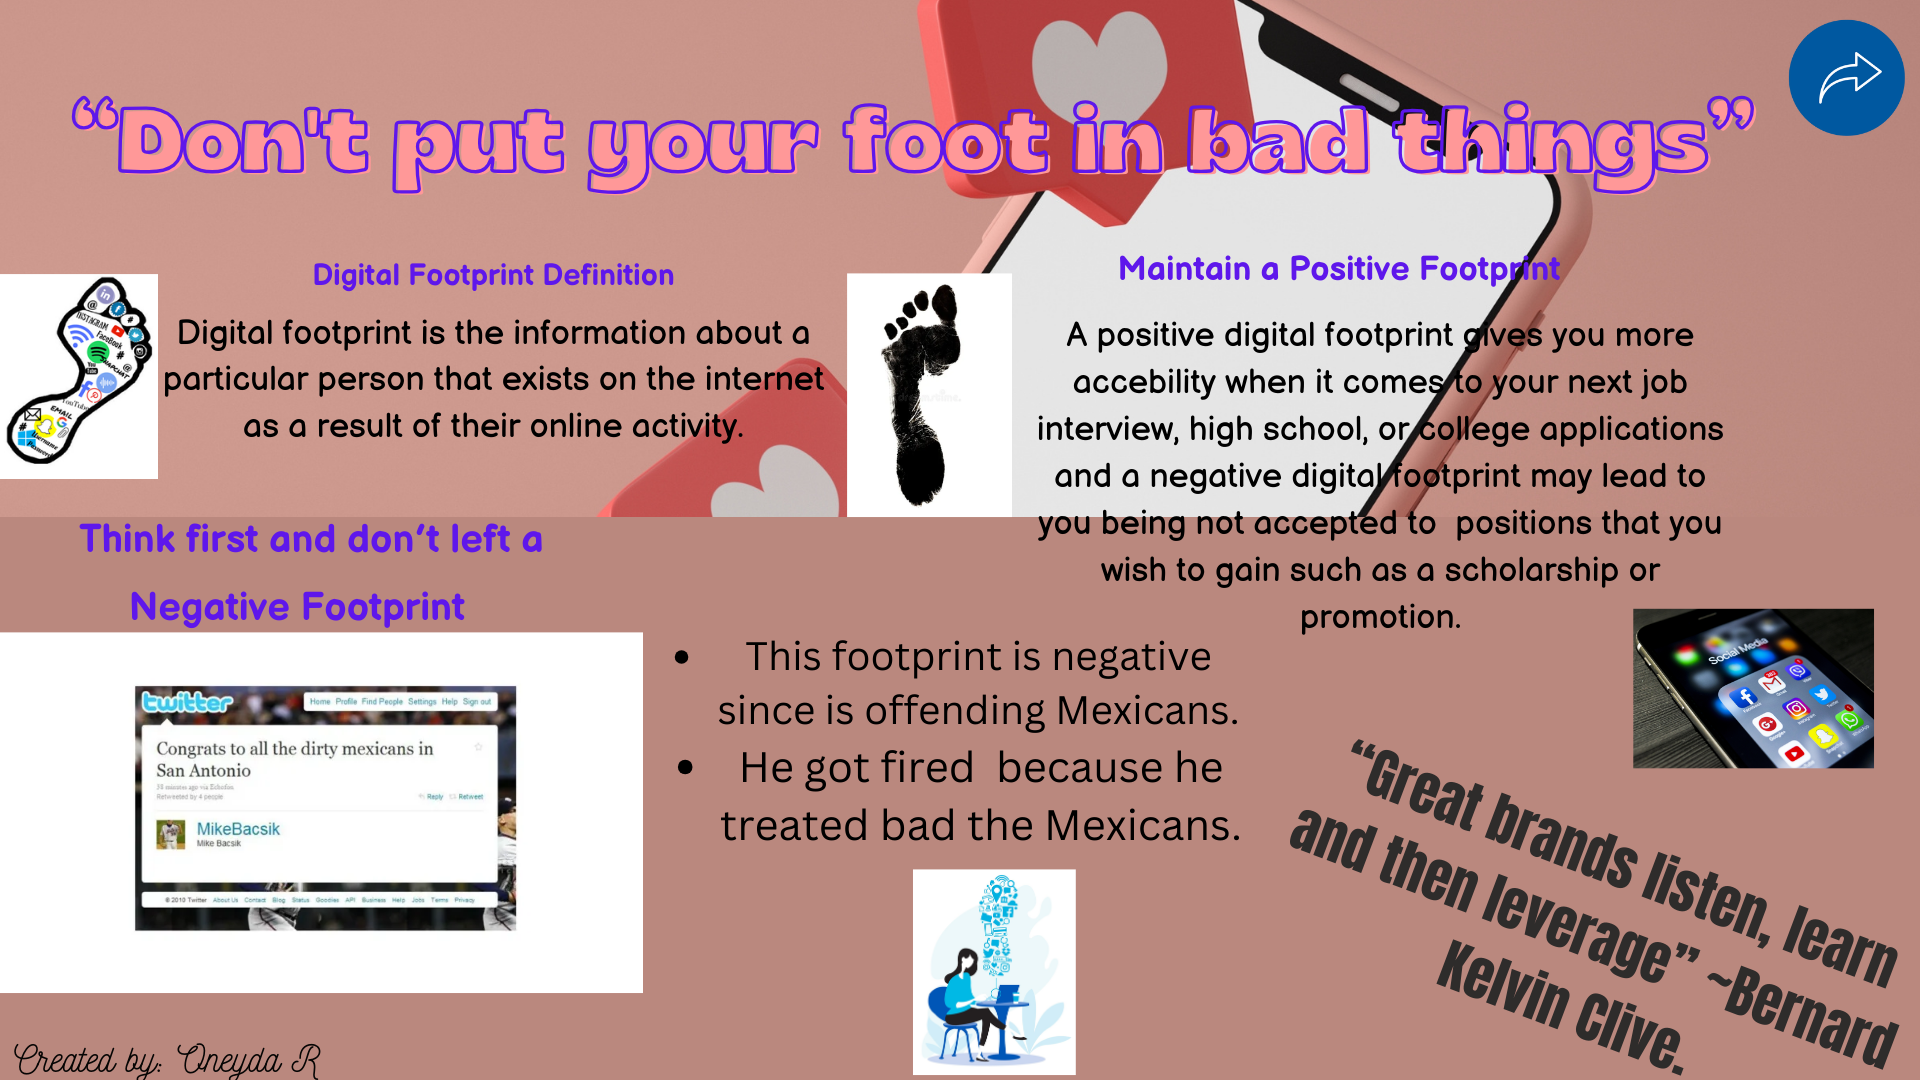 Digital Footprint Poster - Oneyda R